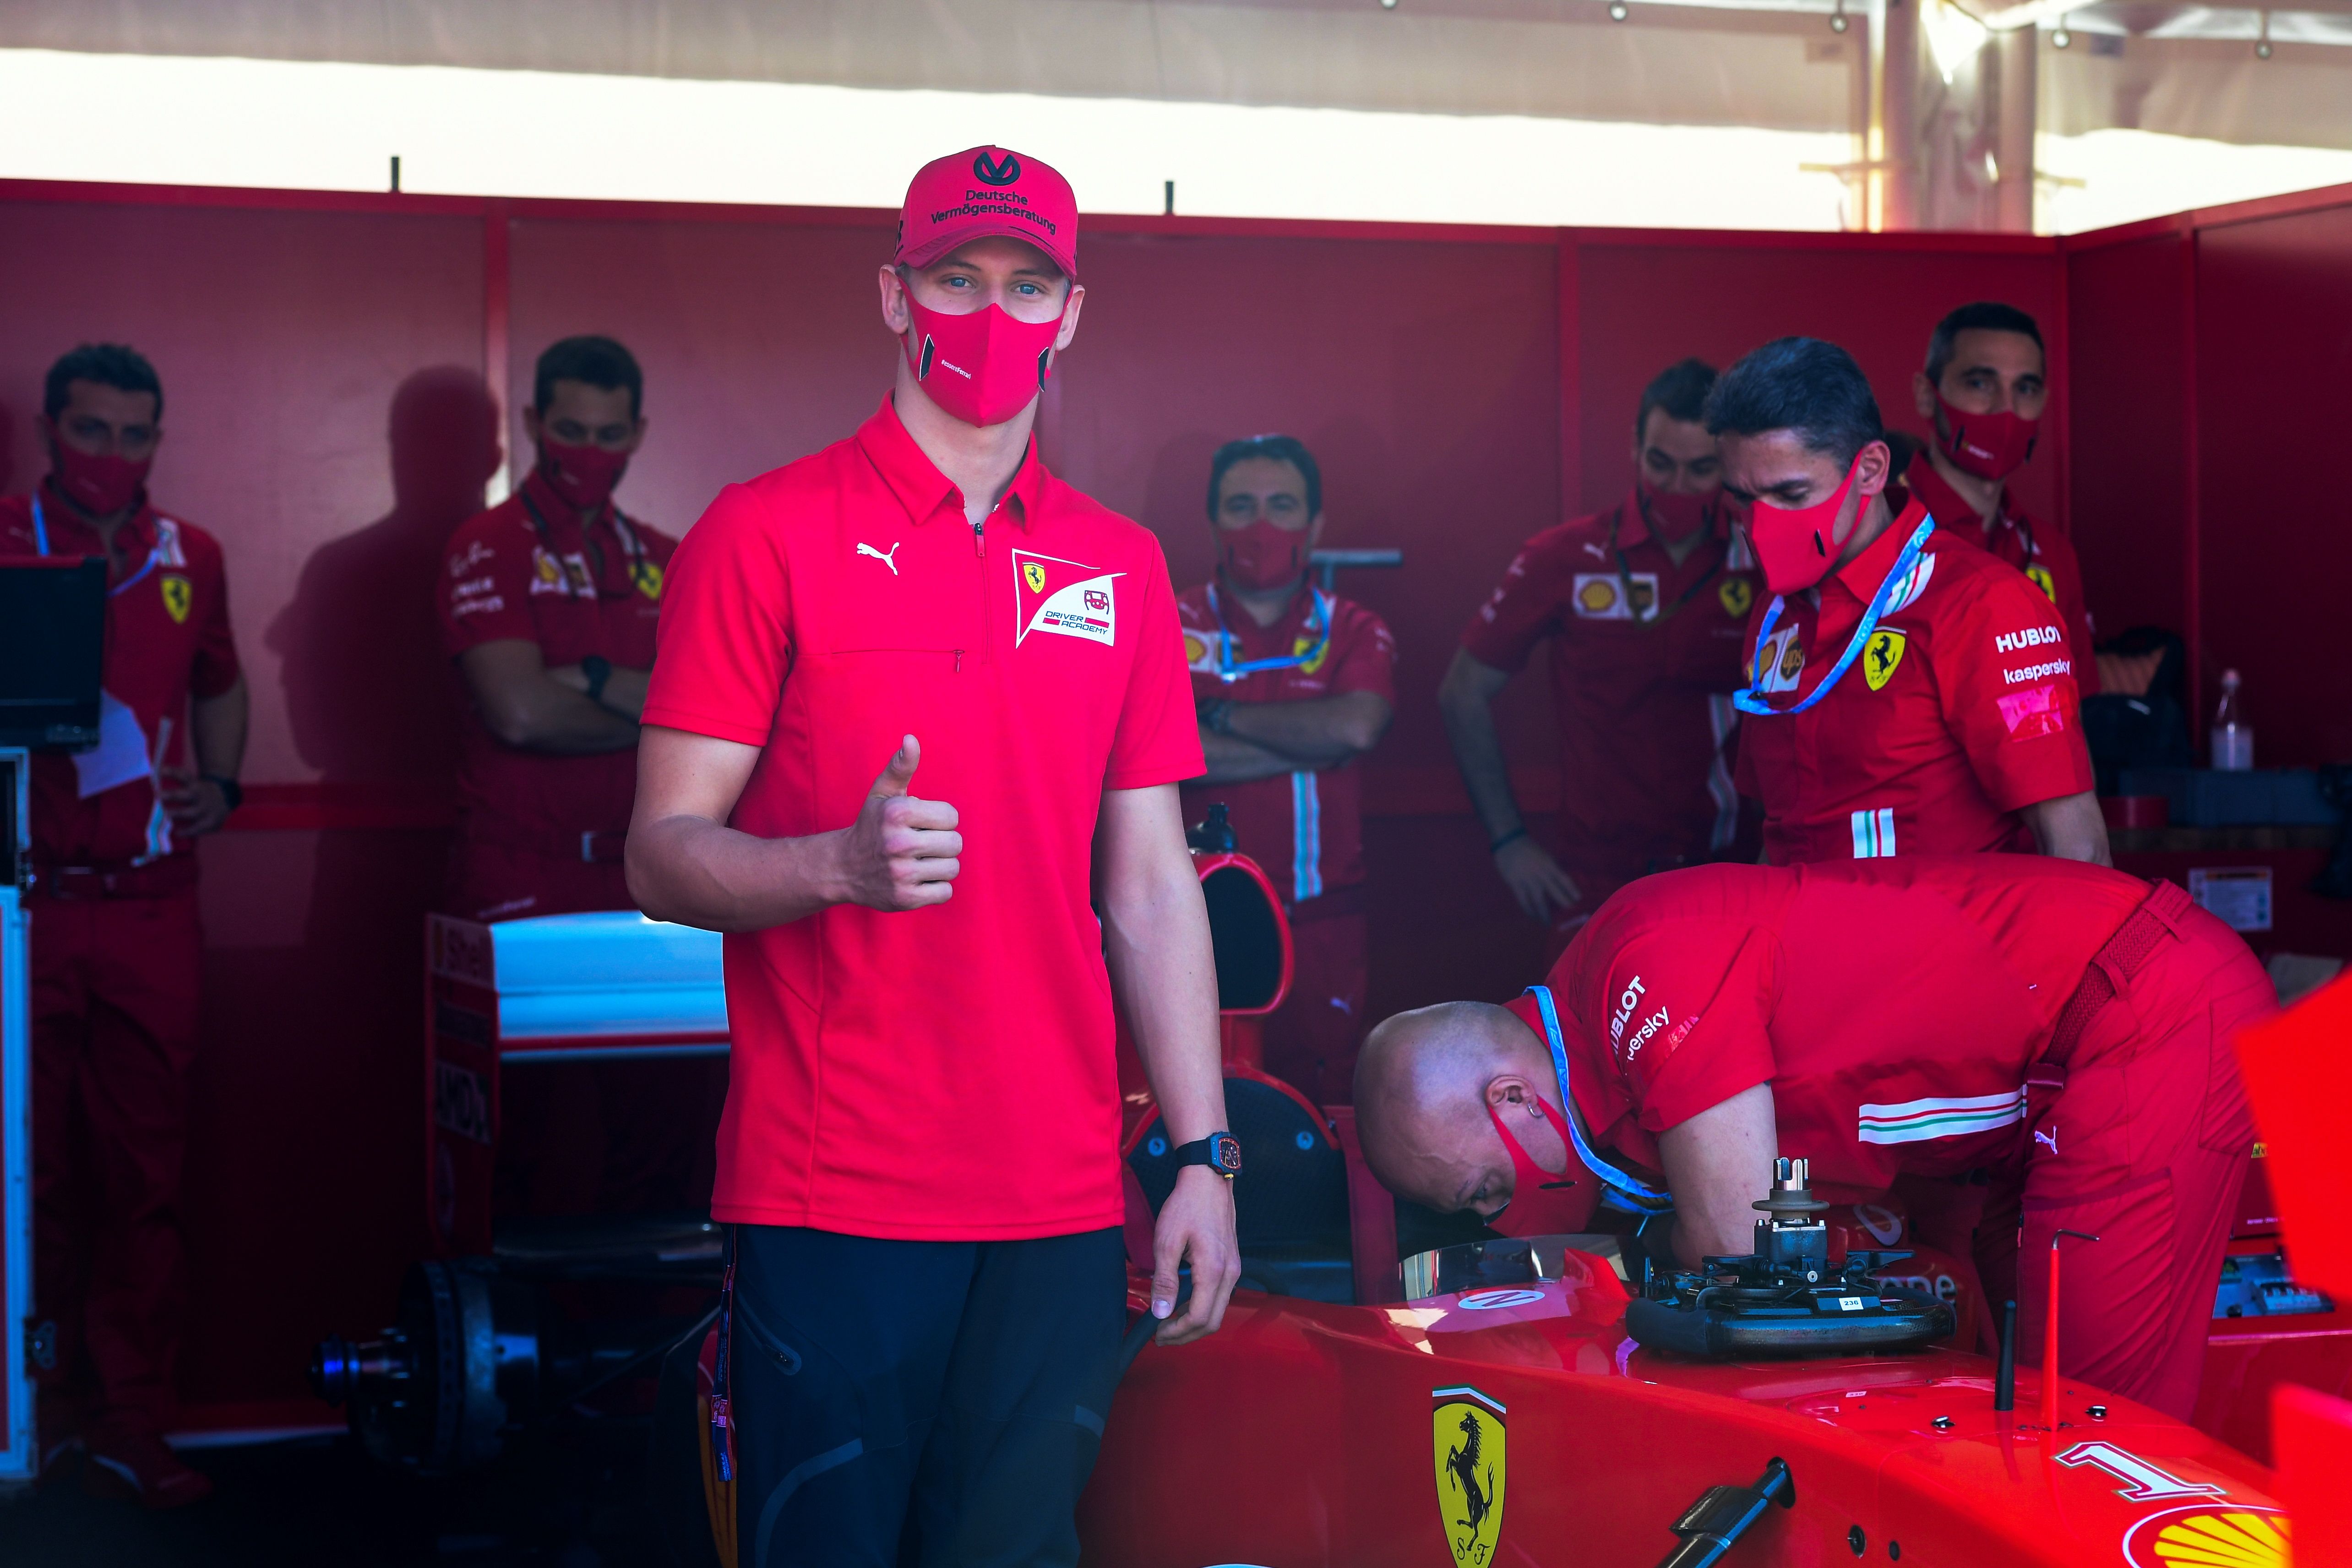 Mick Schumacher, son of former F1 champion Michael Schumacher, visits the Ferrari pit in 2020